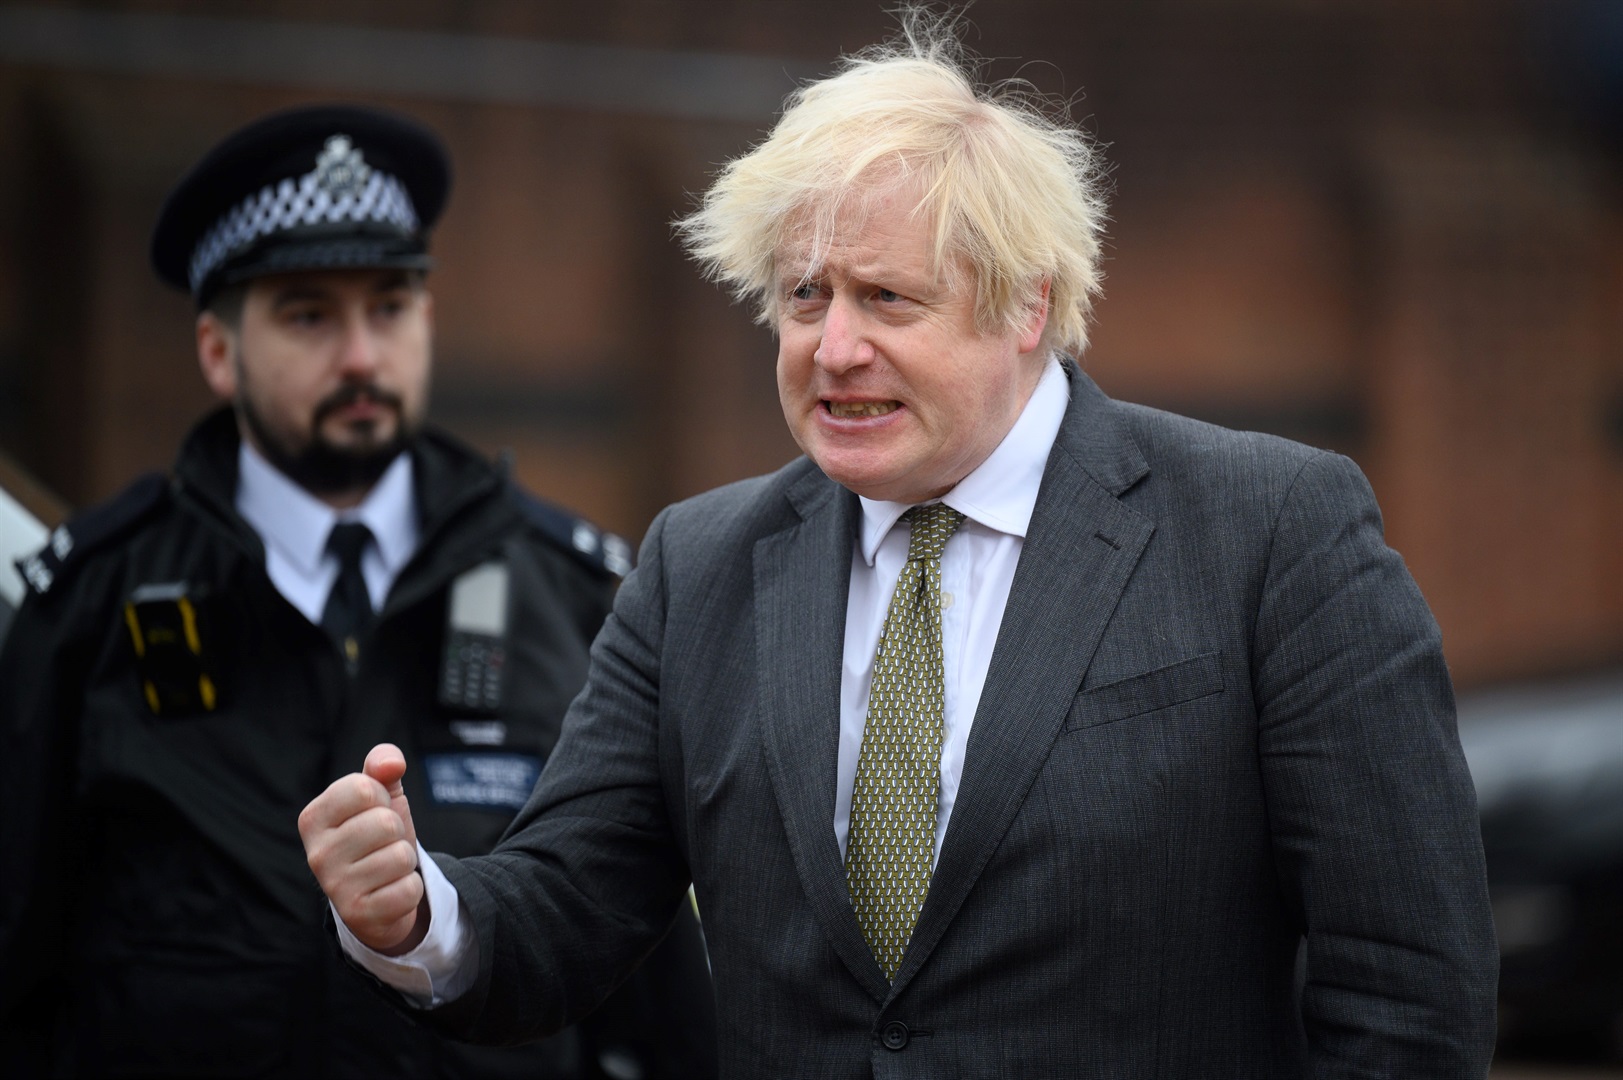 UK Prime Minister Boris Johnson. Leon Neal/Getty Images